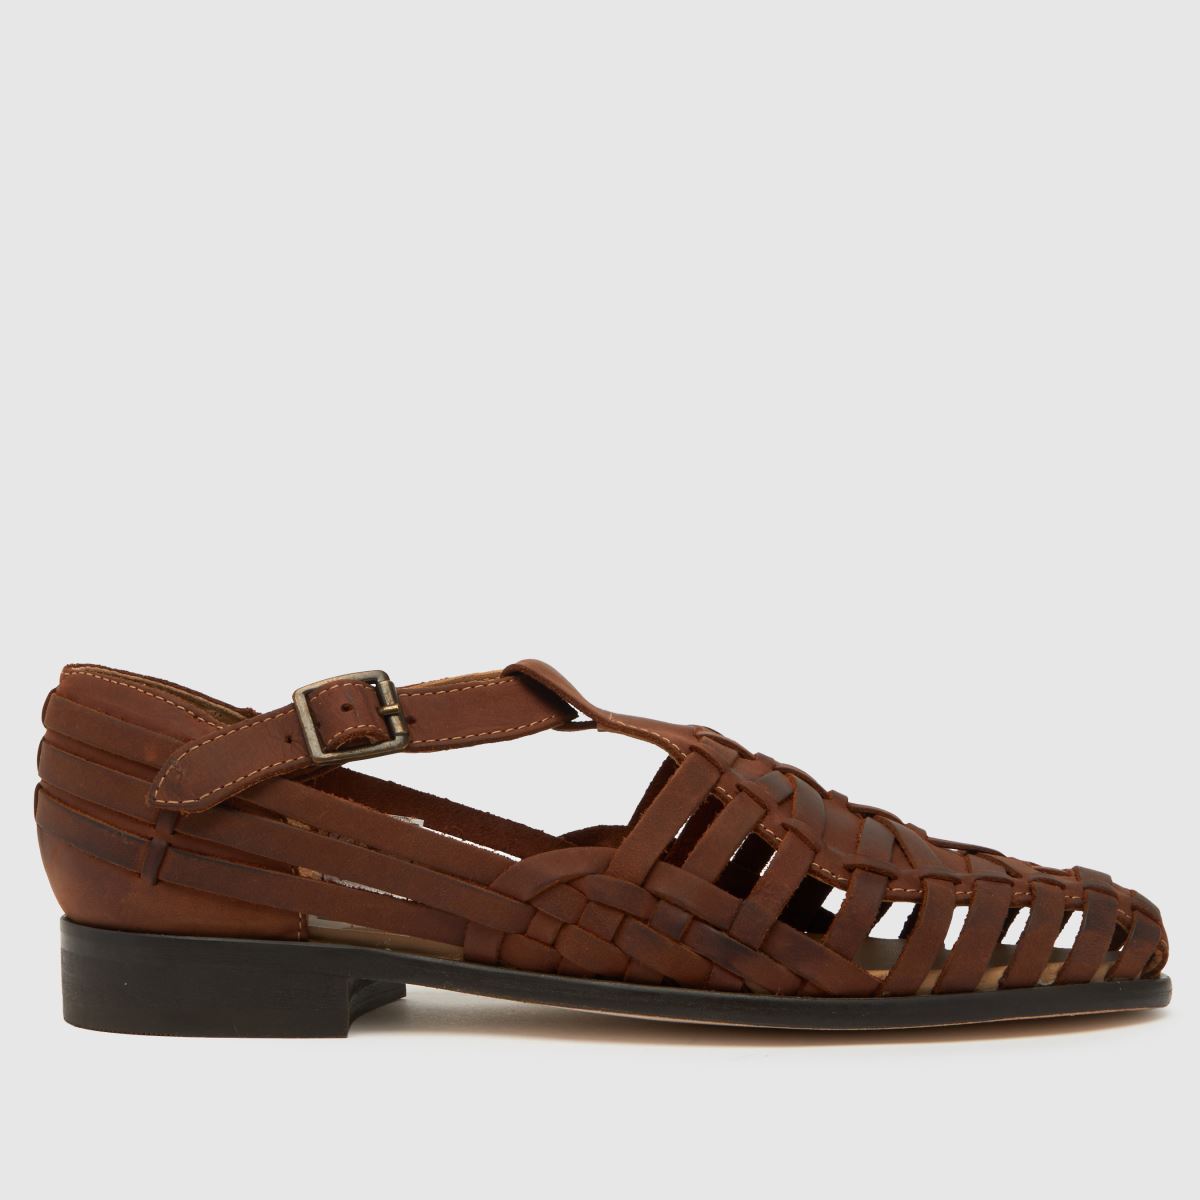 HUDSON LONDON licorice basket sandals in tan